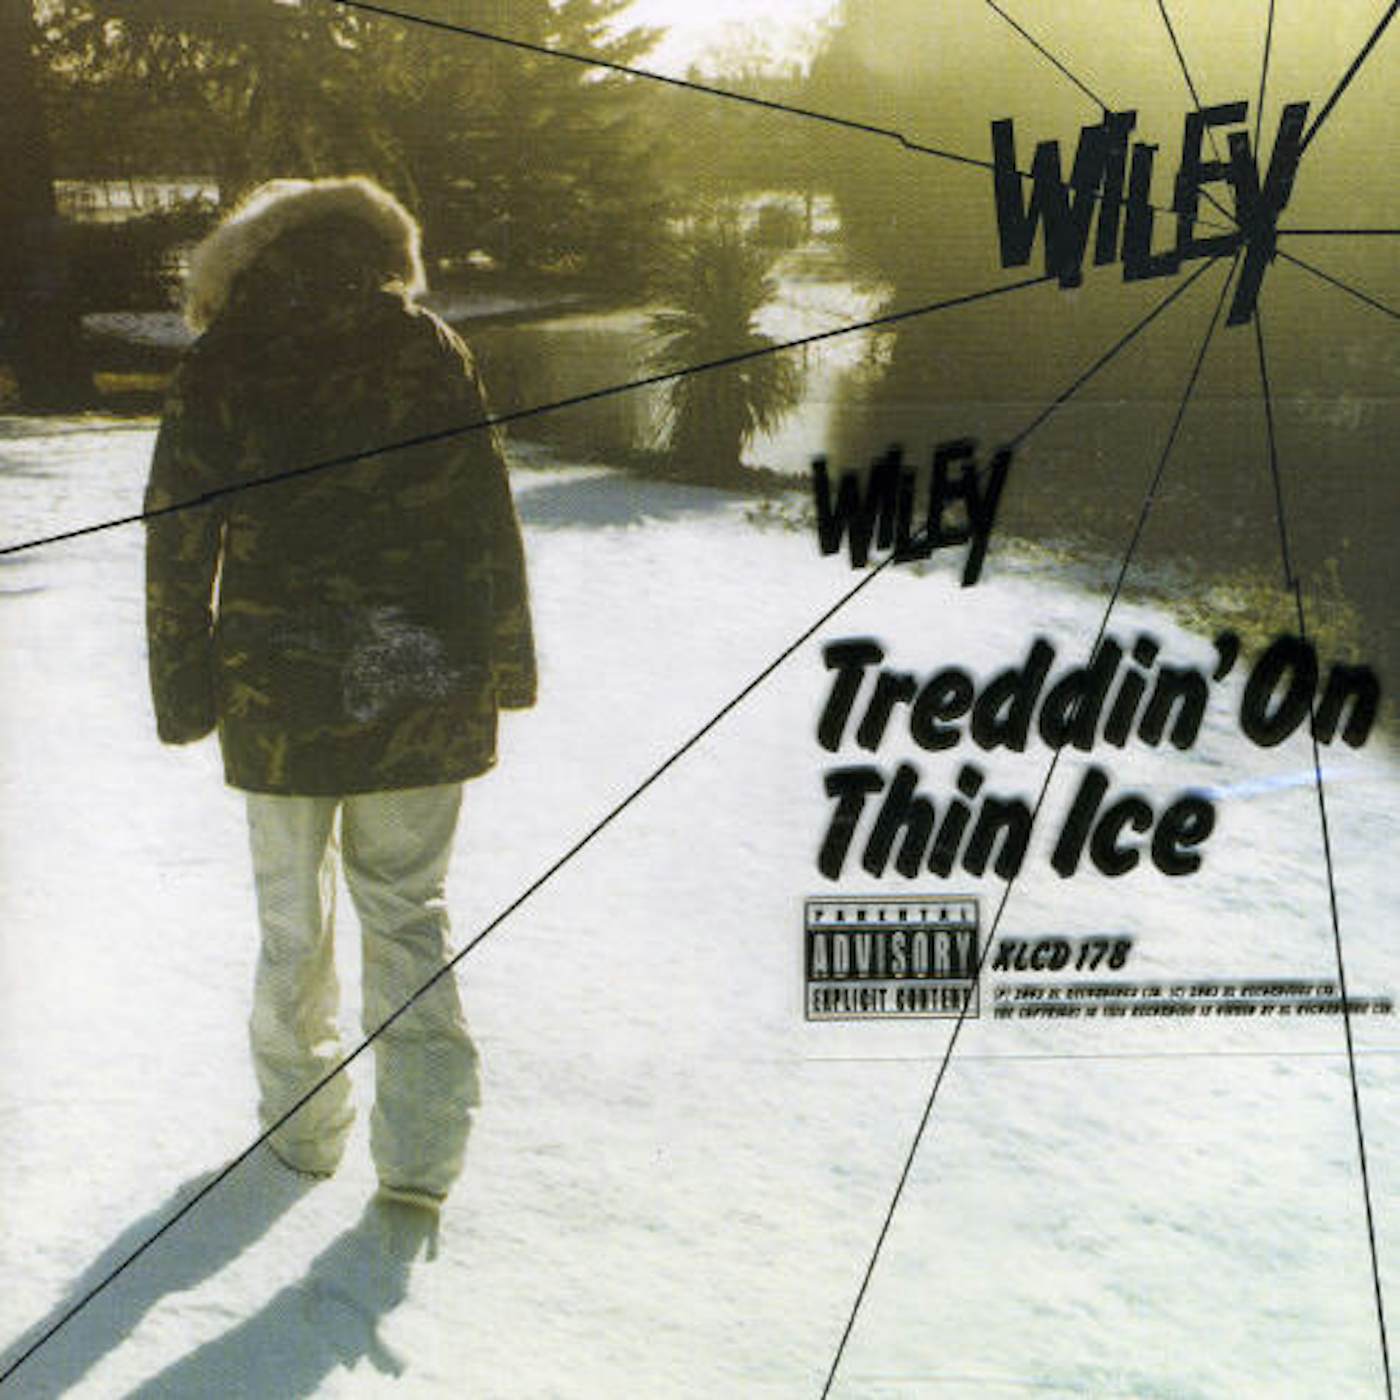 Wiley TREDDIN ON THIN ICE CD